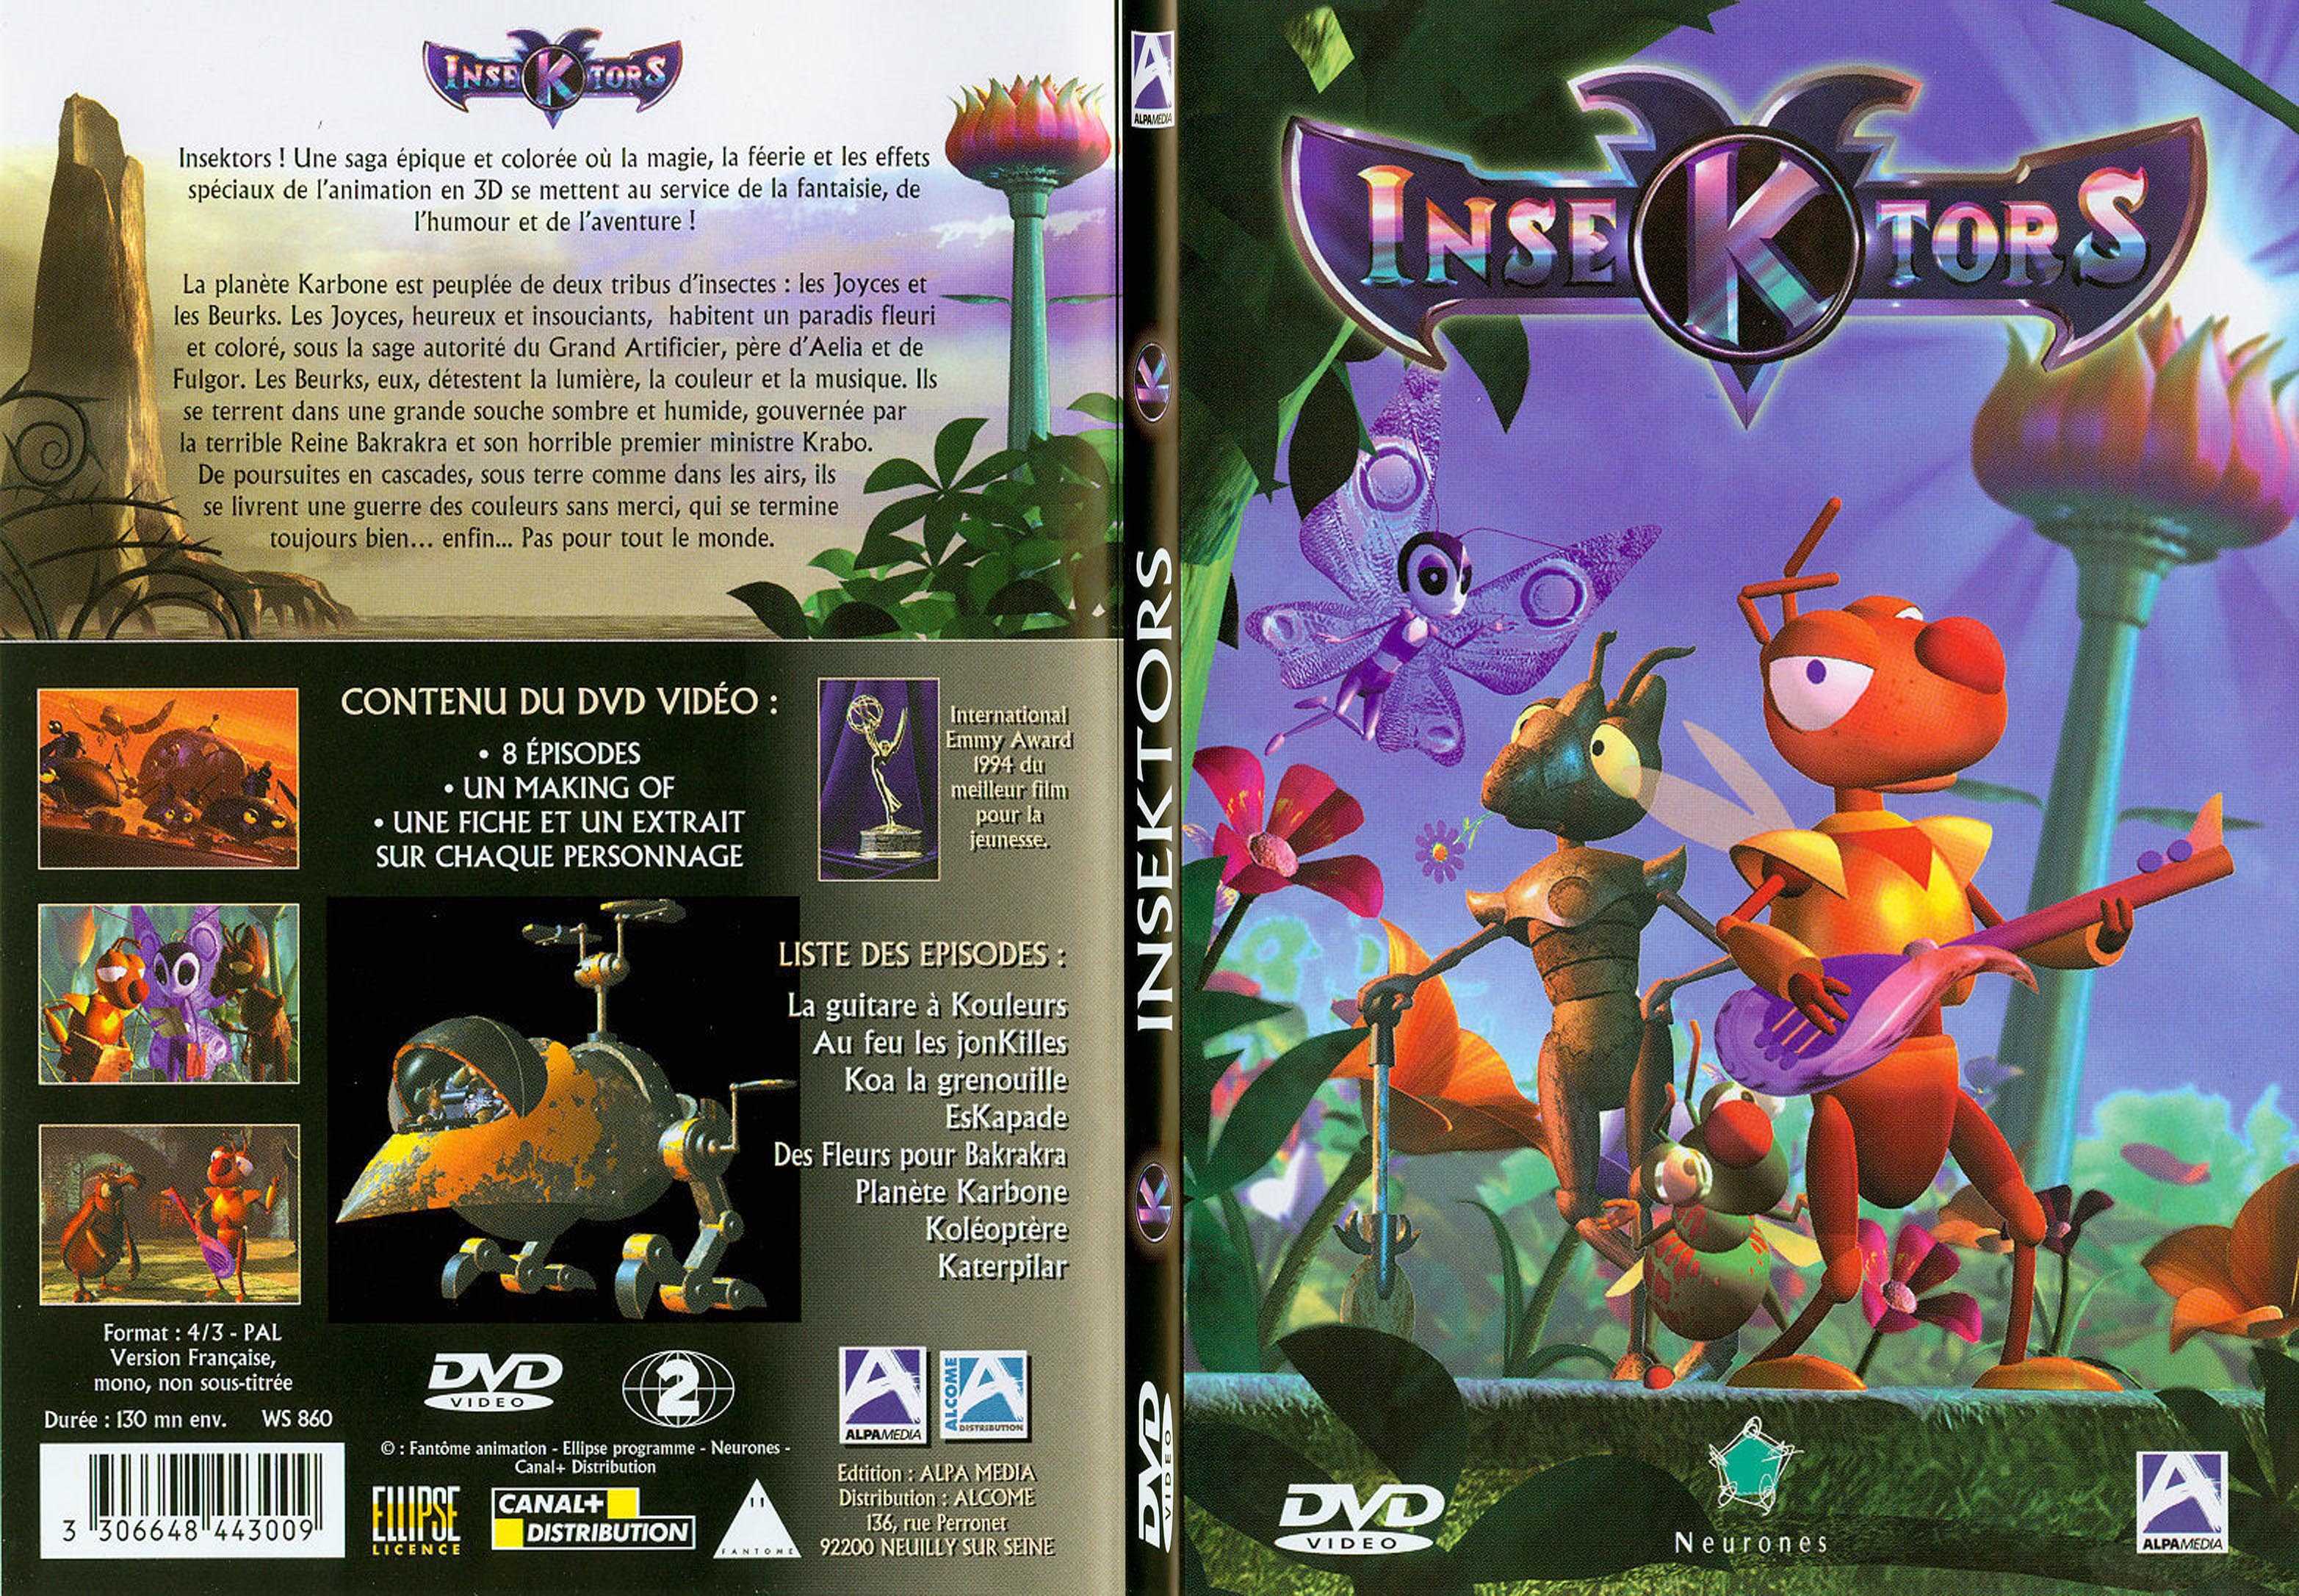 Jaquette DVD Insektors - SLIM